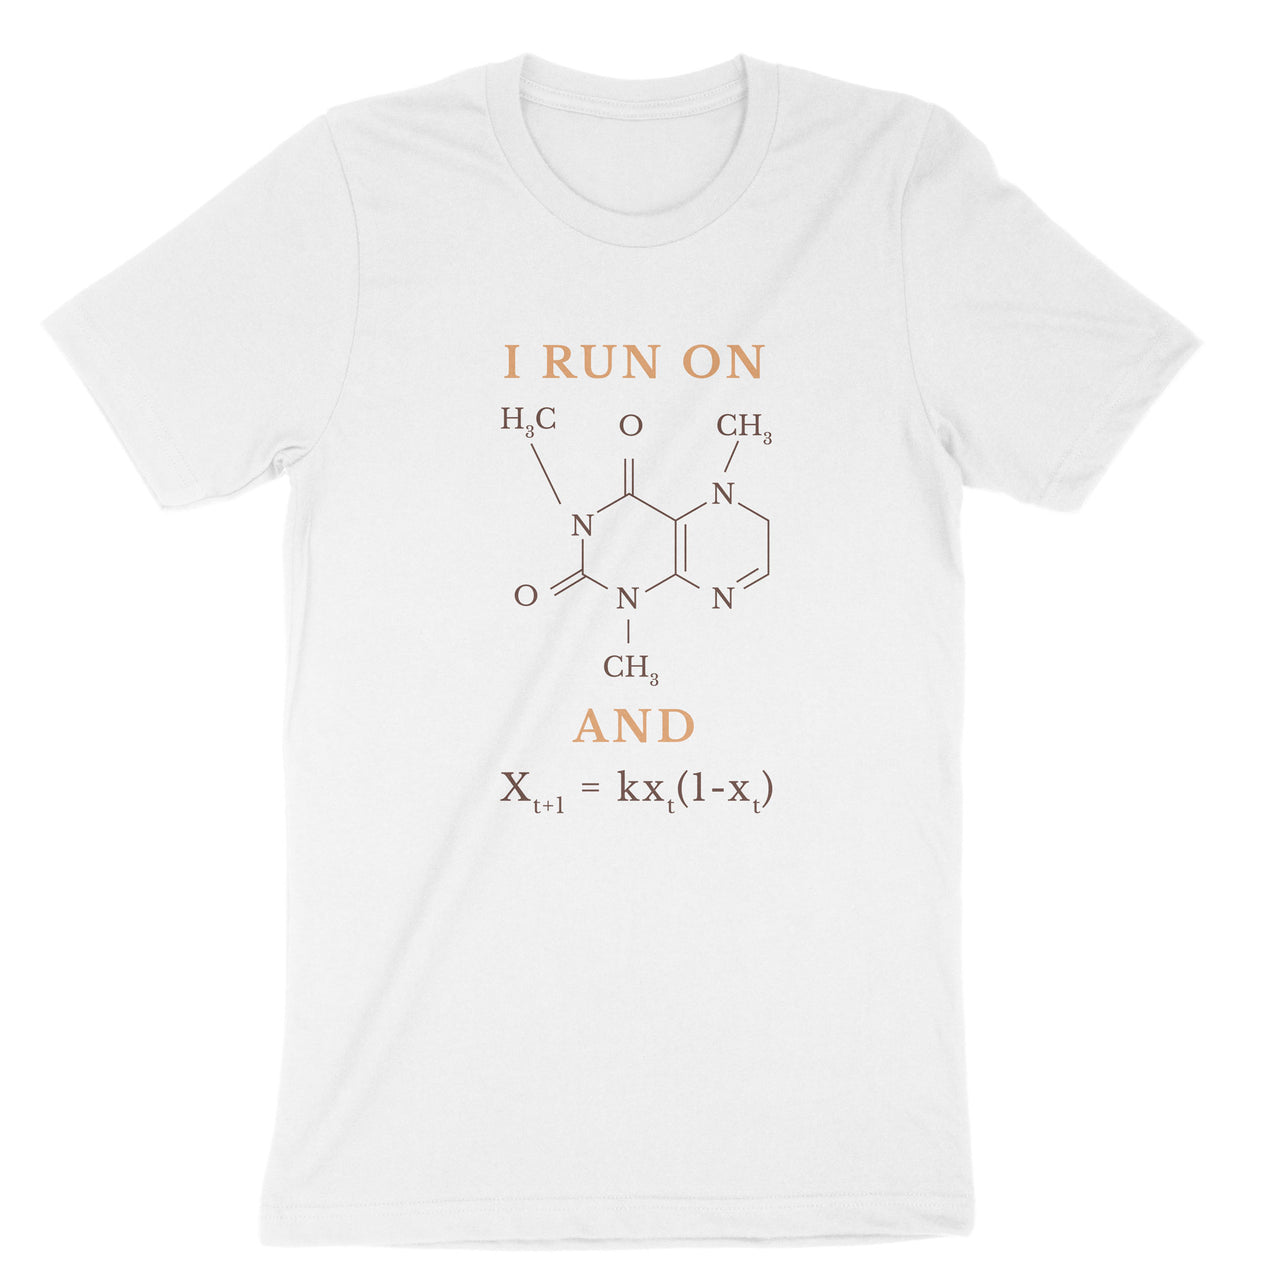 Caffeine Forumula T-Shirt, I Run on Caffeine and Chaos Chemistry Formula Tee Shirt